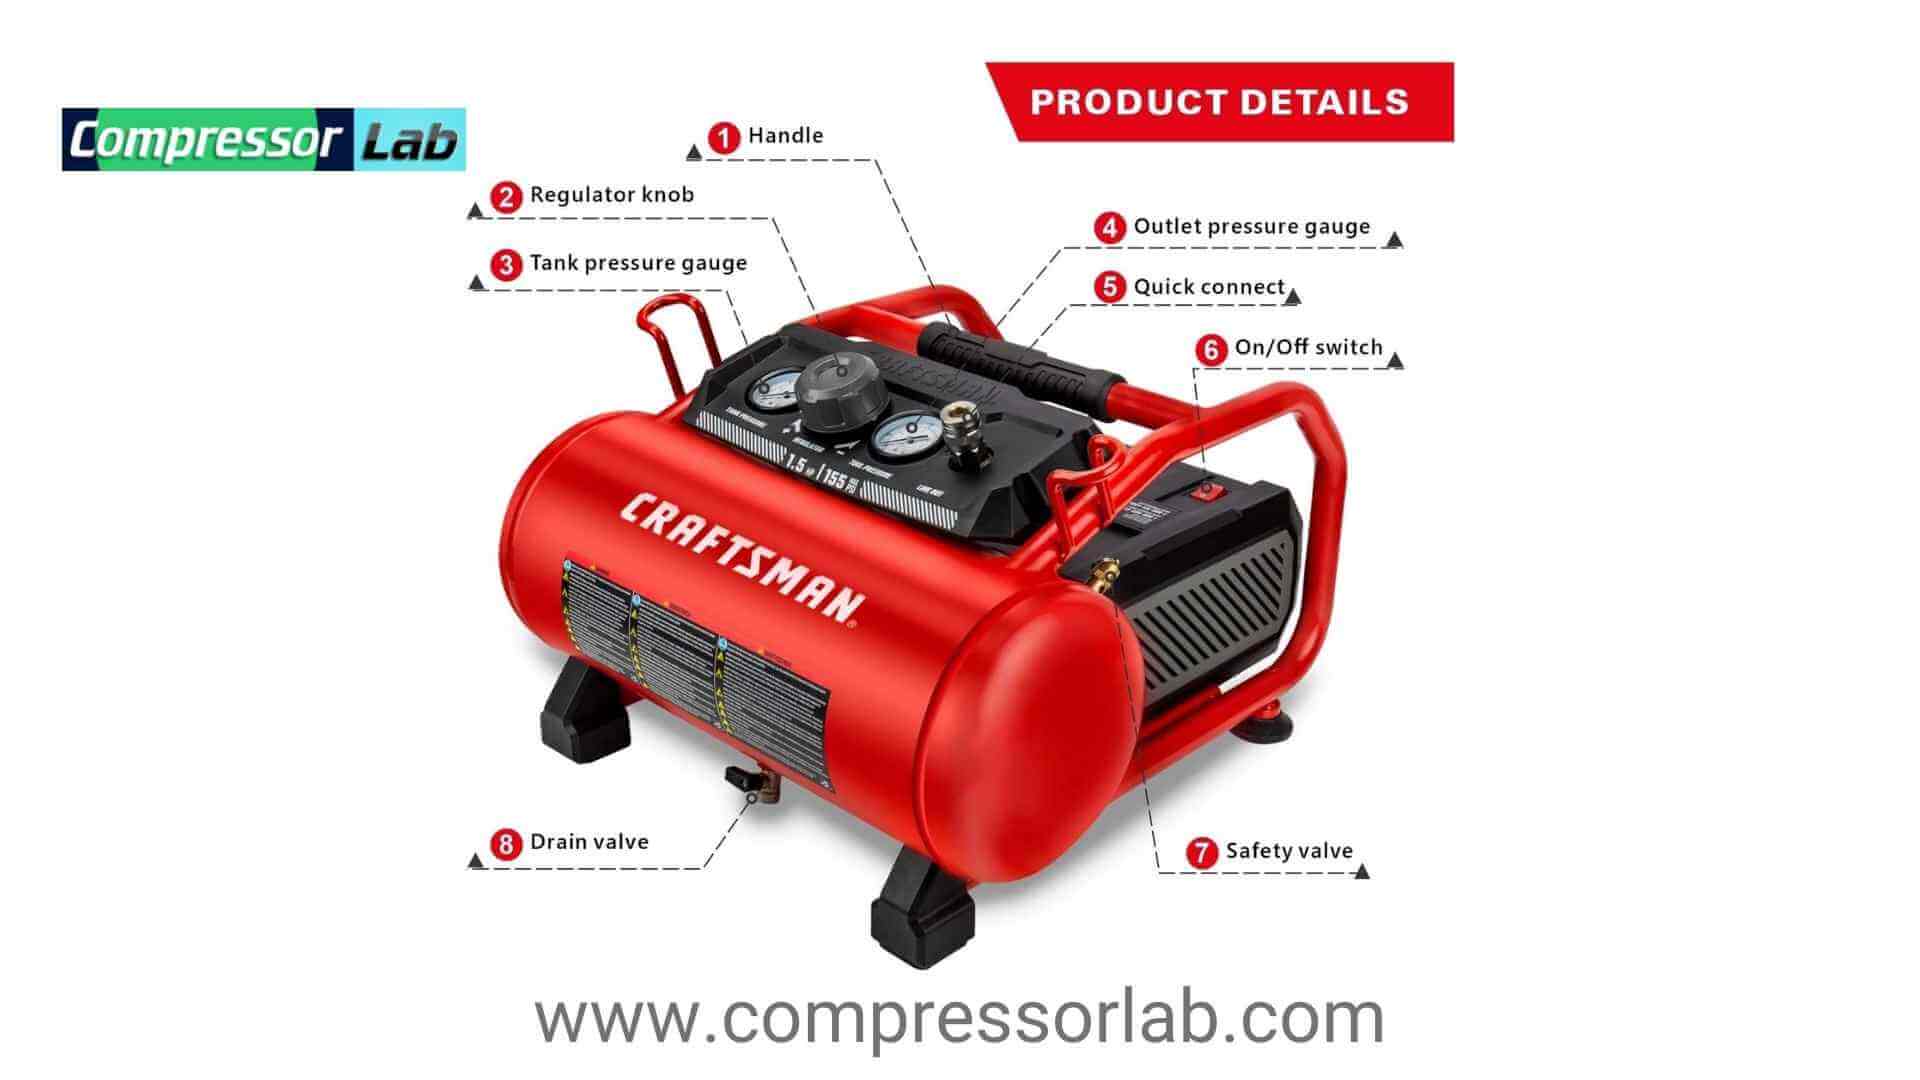 Craftsman Air Compressor 3 Gallon.jpg